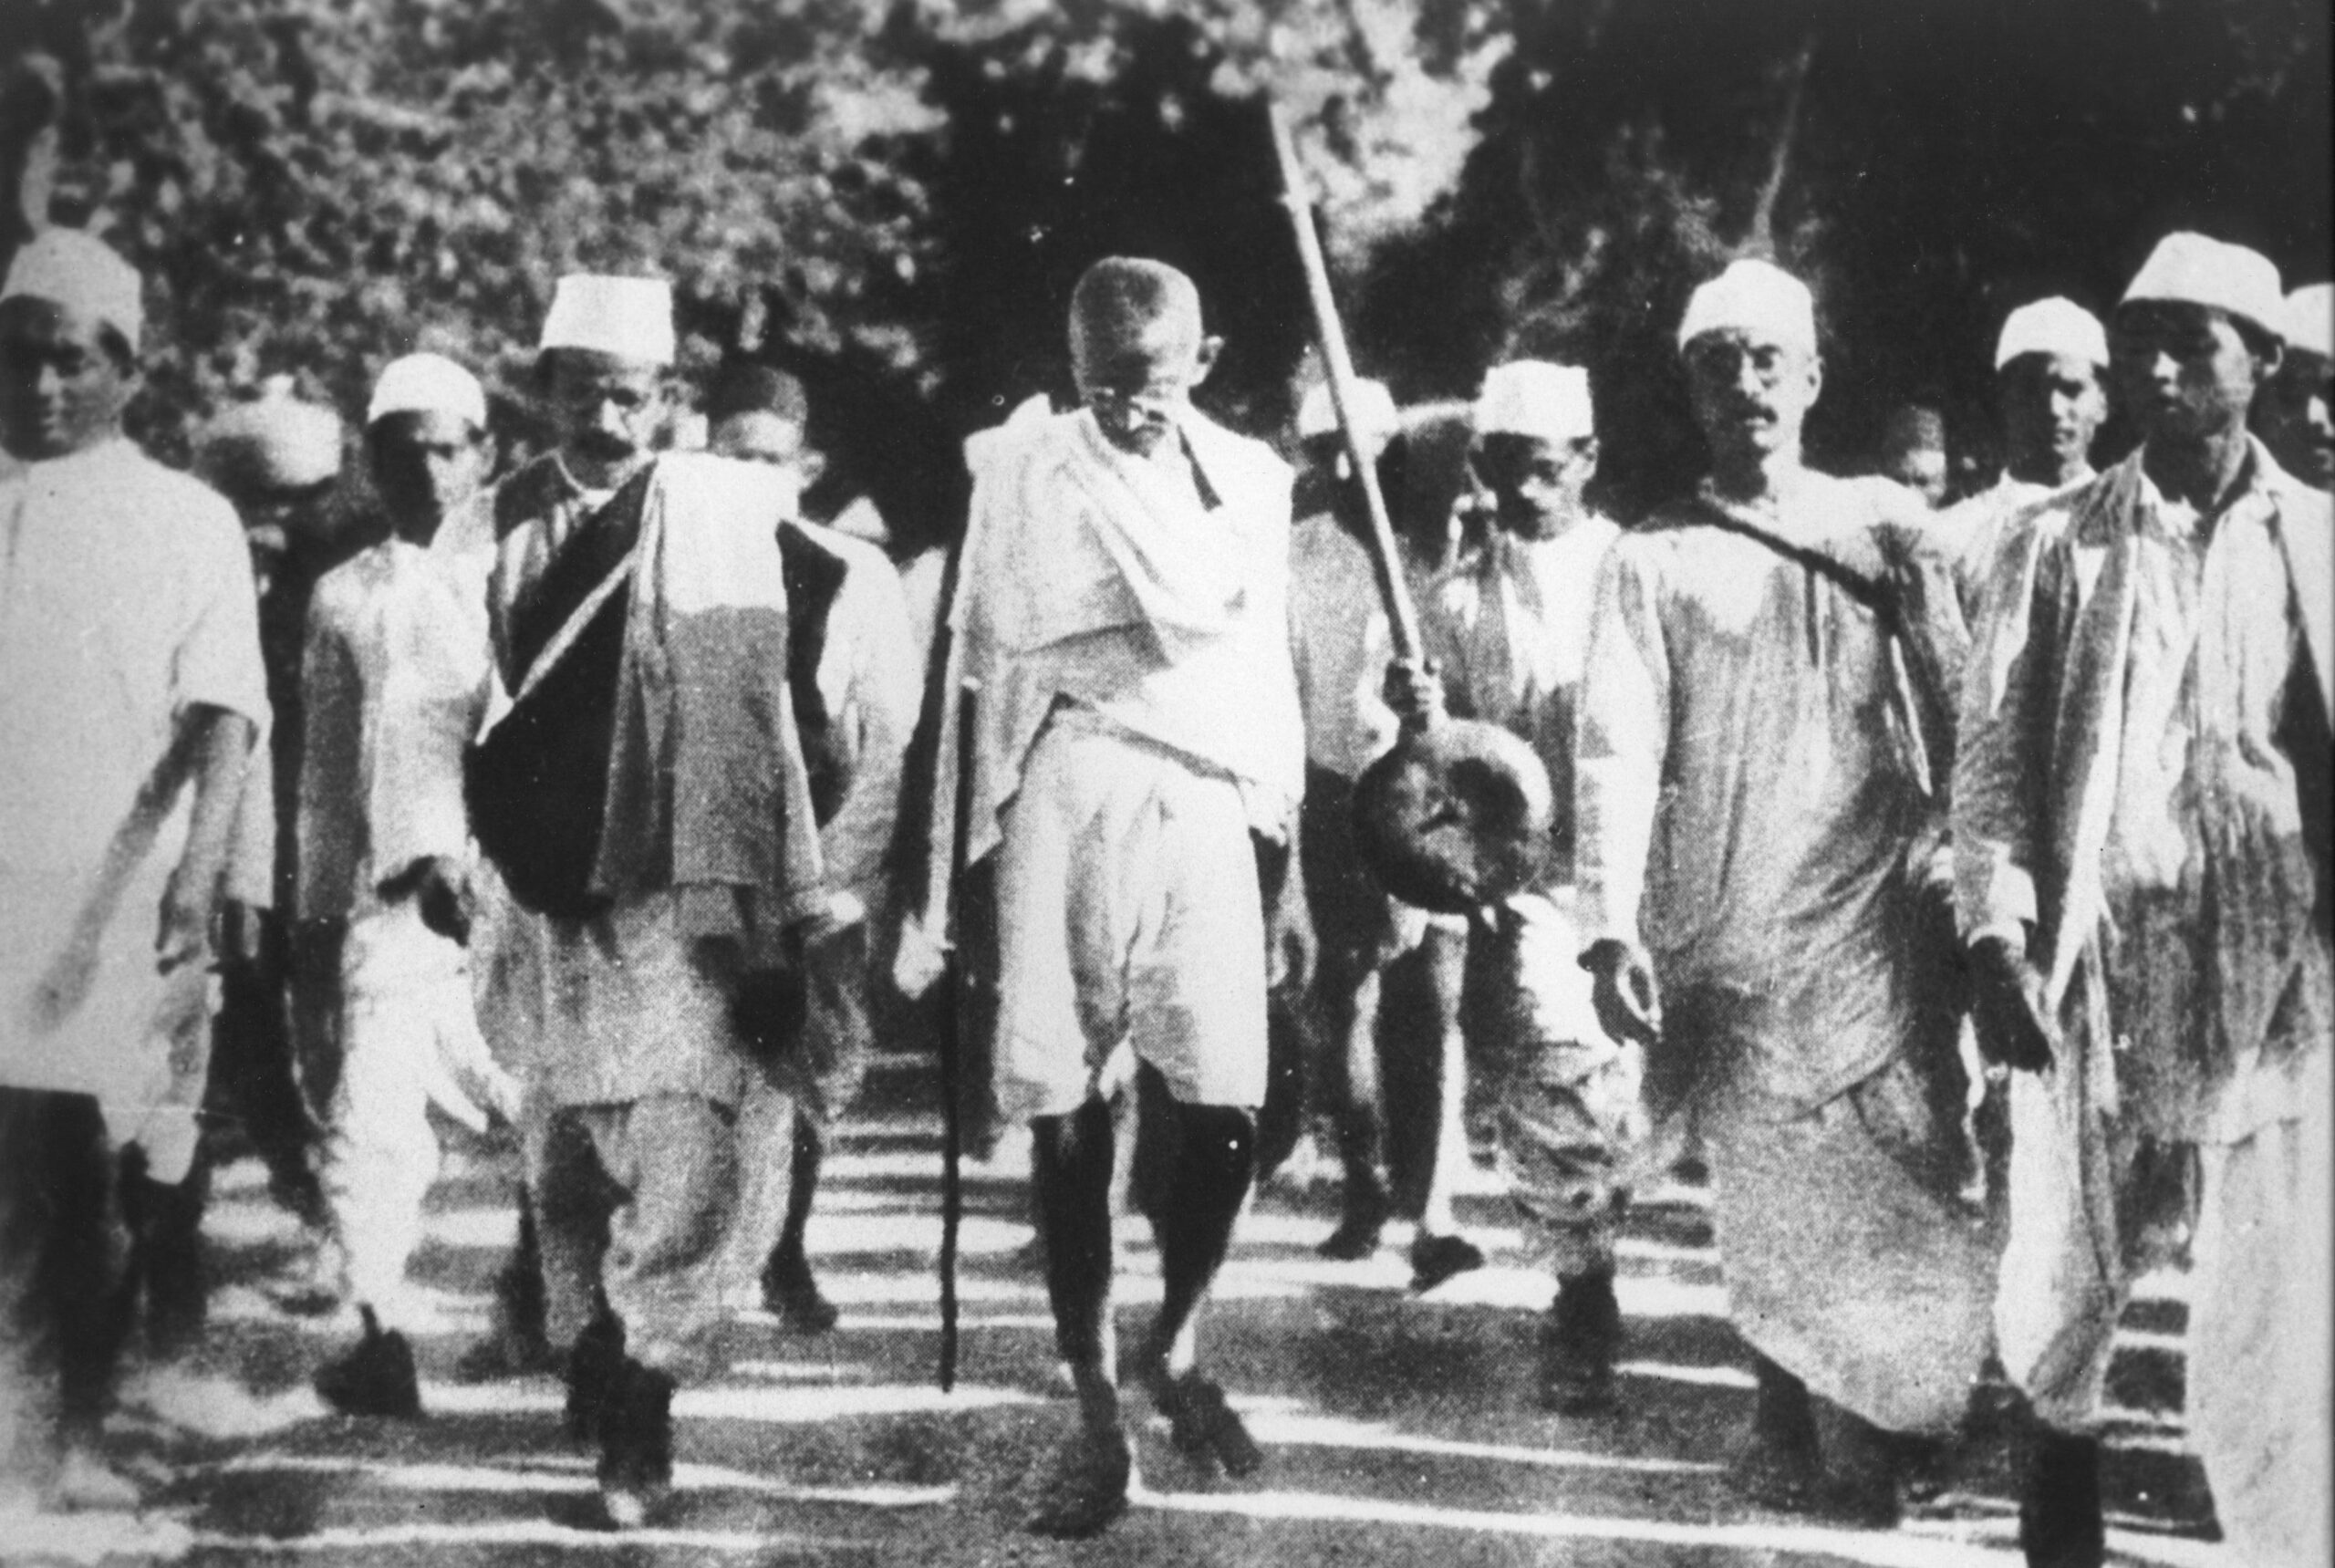 Gandhi at the Salt Marches